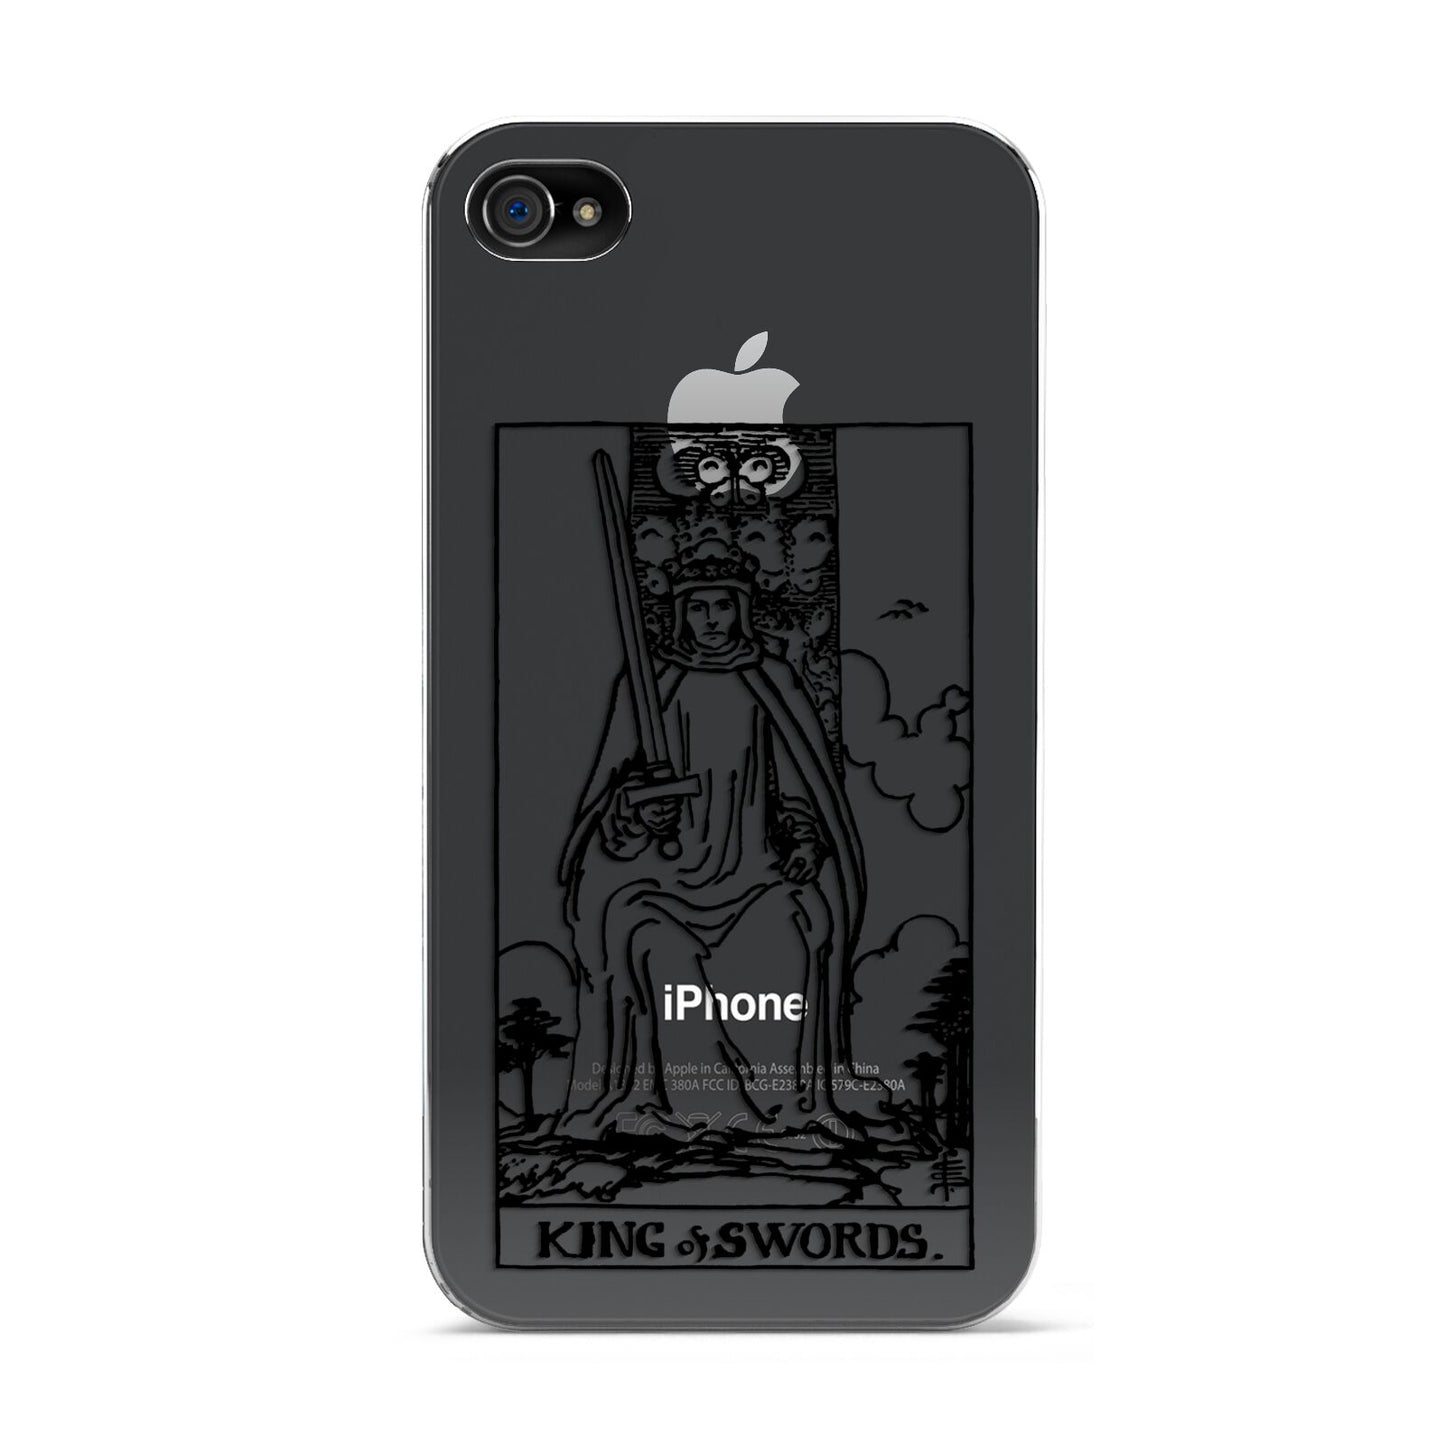 King of Swords Monochrome Apple iPhone 4s Case